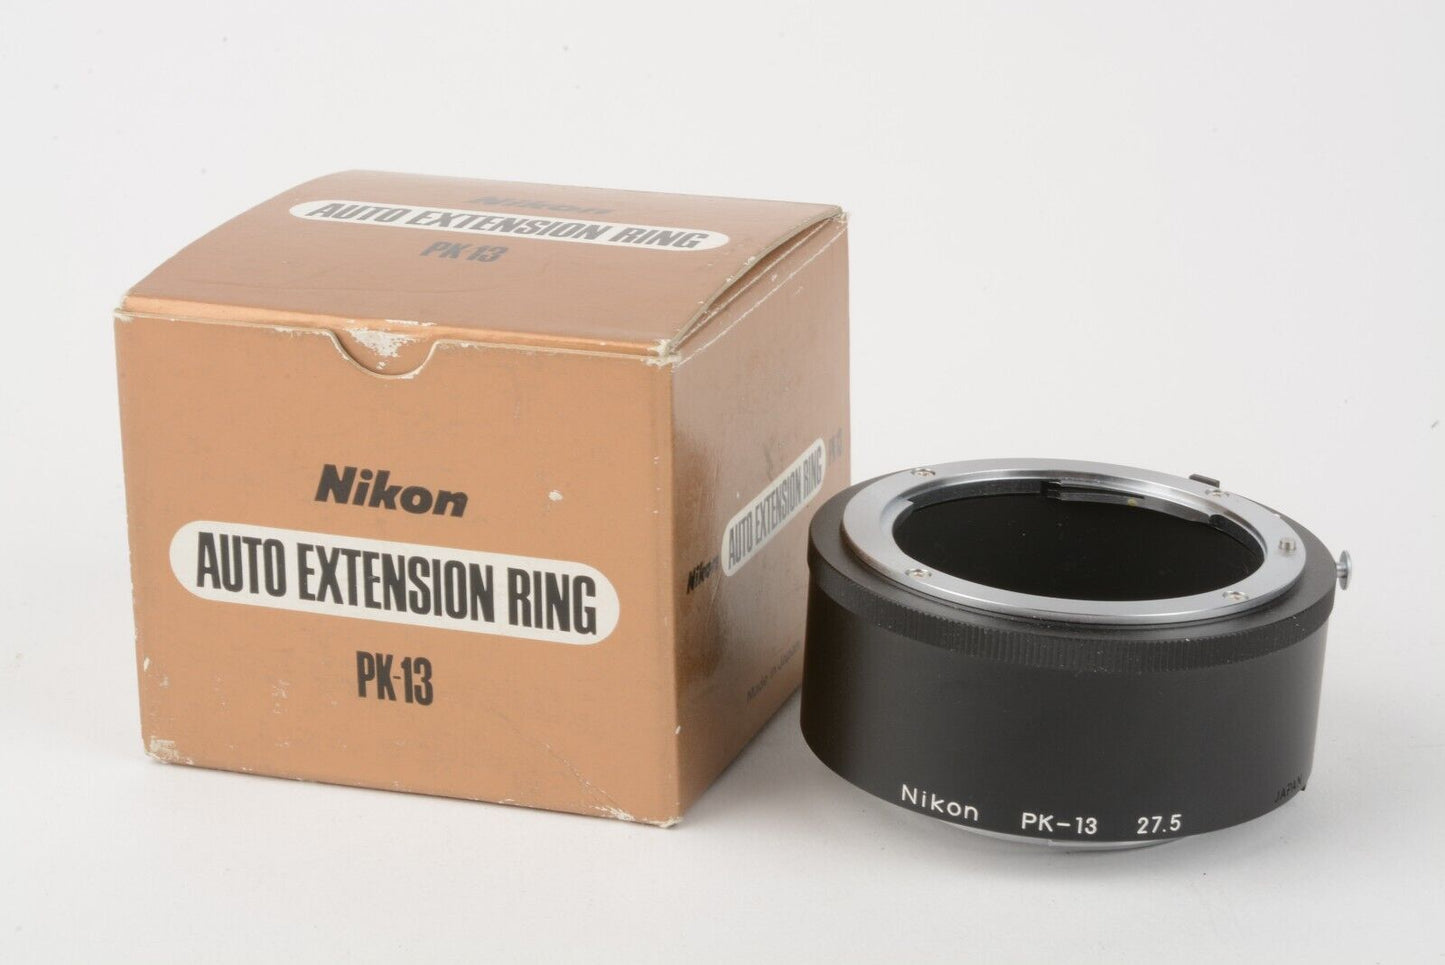 MINT NIKON PK-13 27.5mm AUTO EXTENSION RING, BOXED